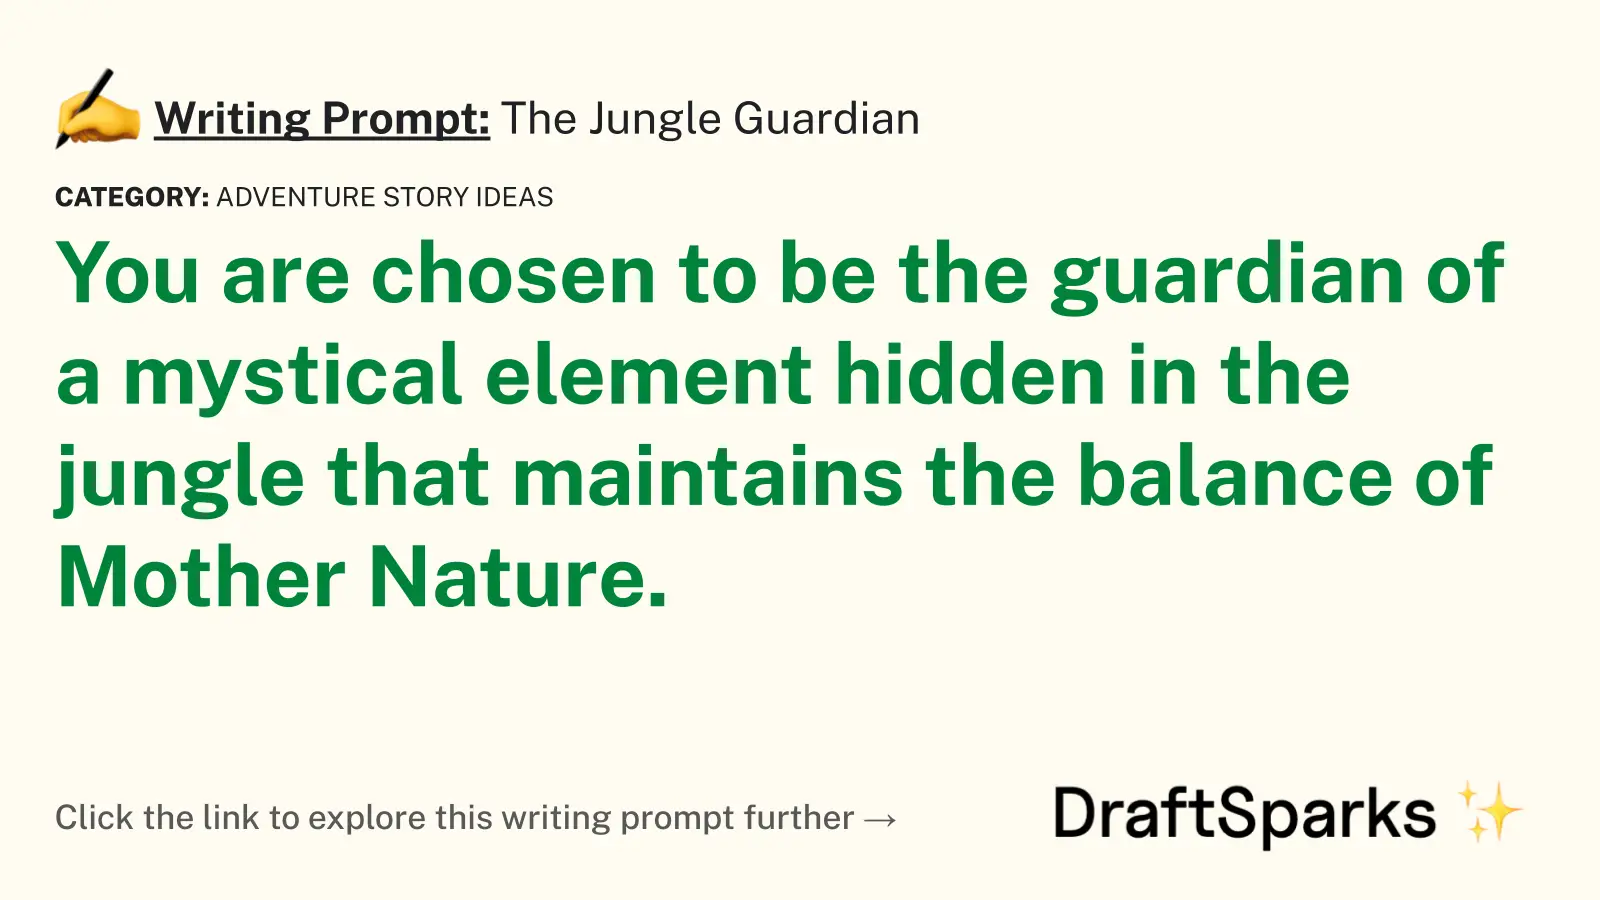 The Jungle Guardian